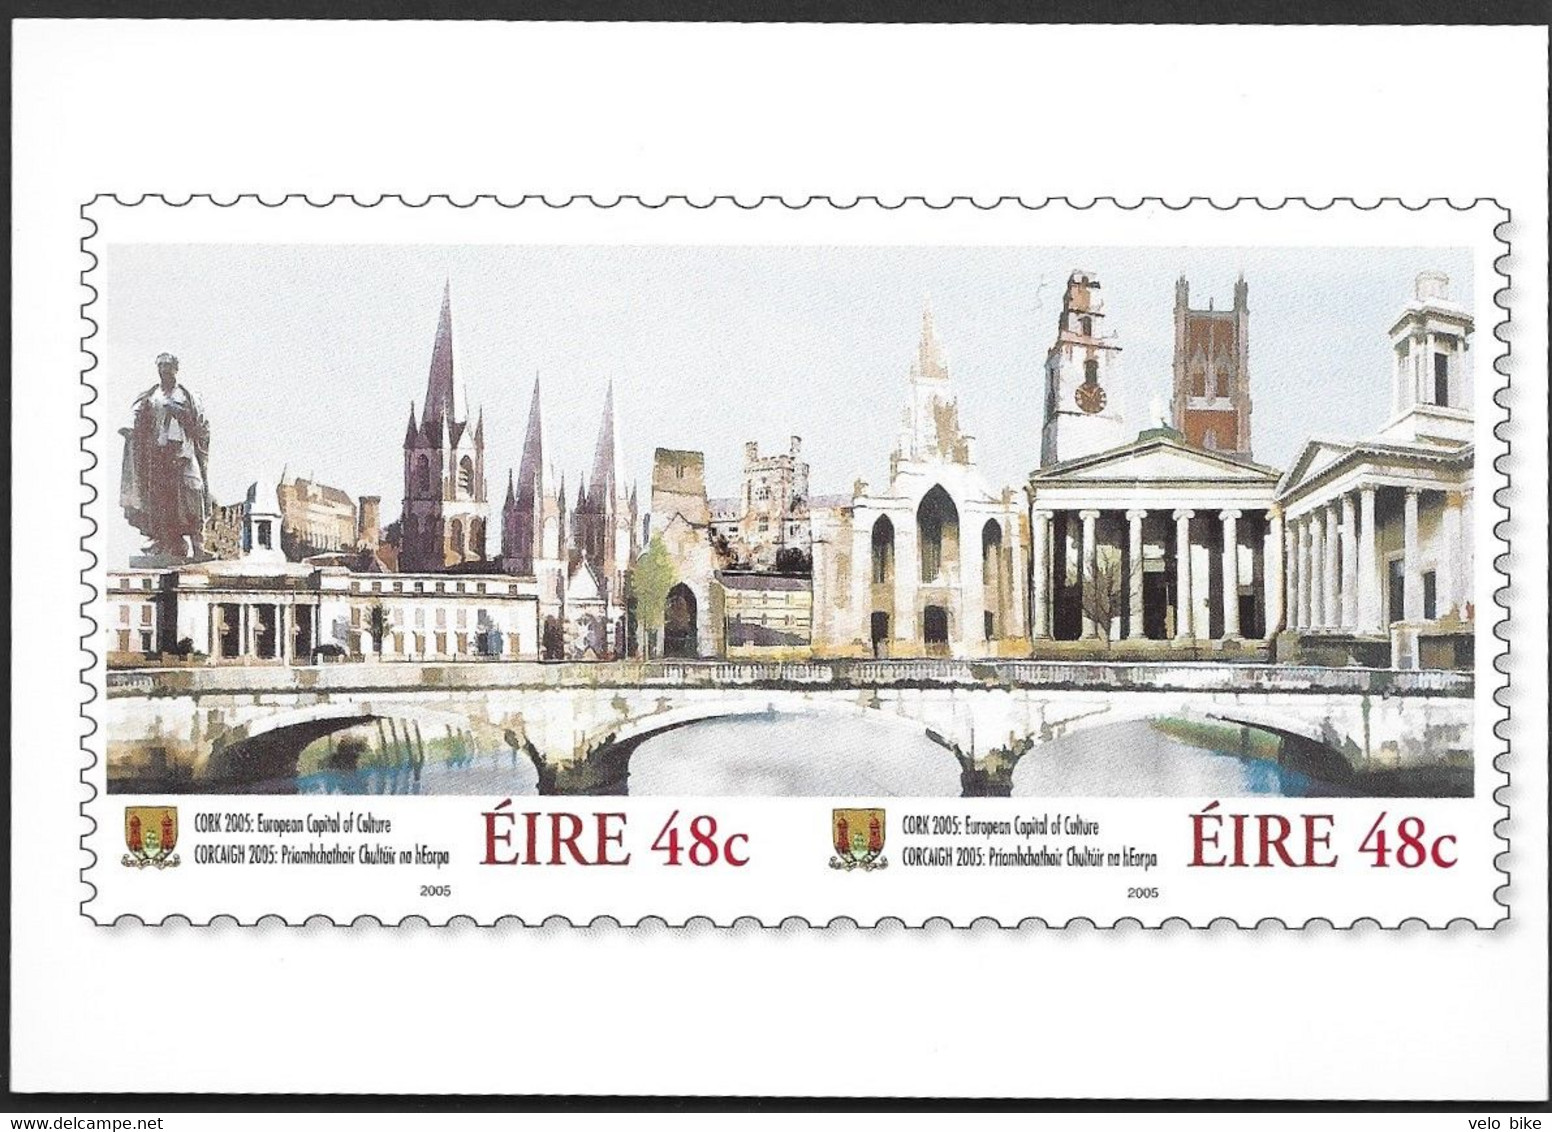 Eire Ireland Postal Stationery Postage Paid Cork 2005 Art Statue Bridge Church Capitol Of Culture Prioritaire Airmail - Ganzsachen